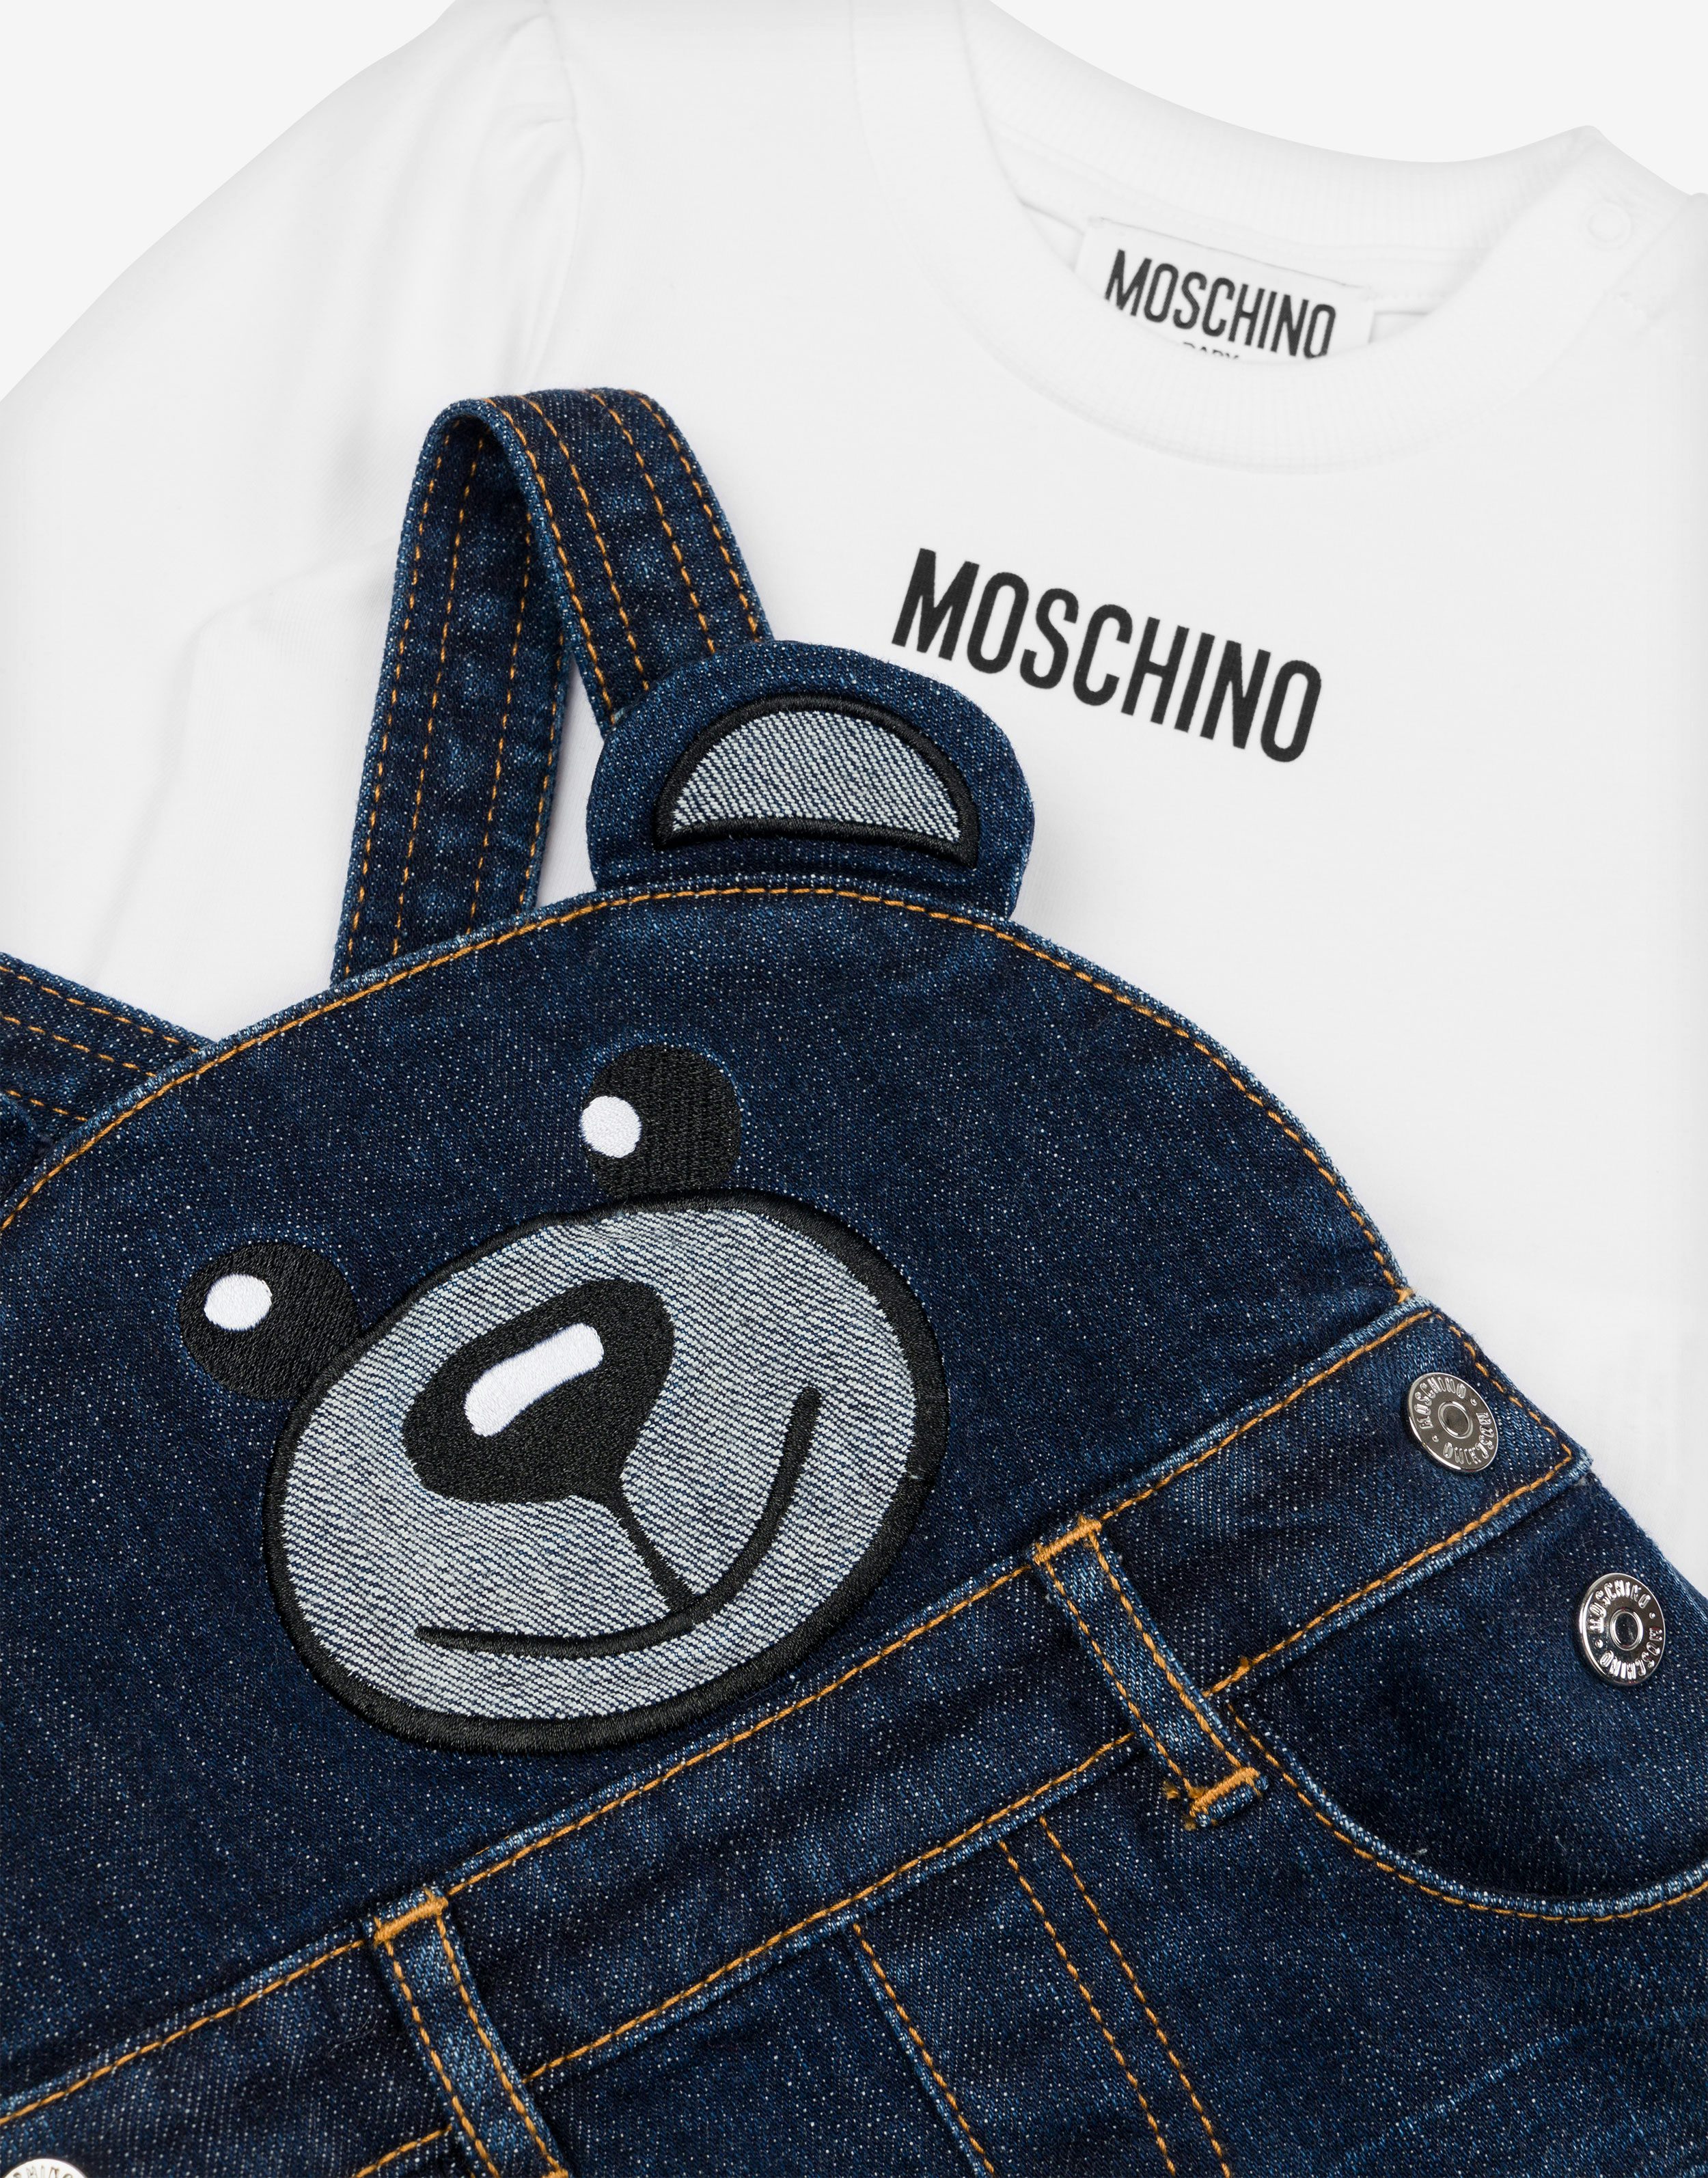 Moschino Teddy Bear T-shirt and dungaree skirt co-ord set 1